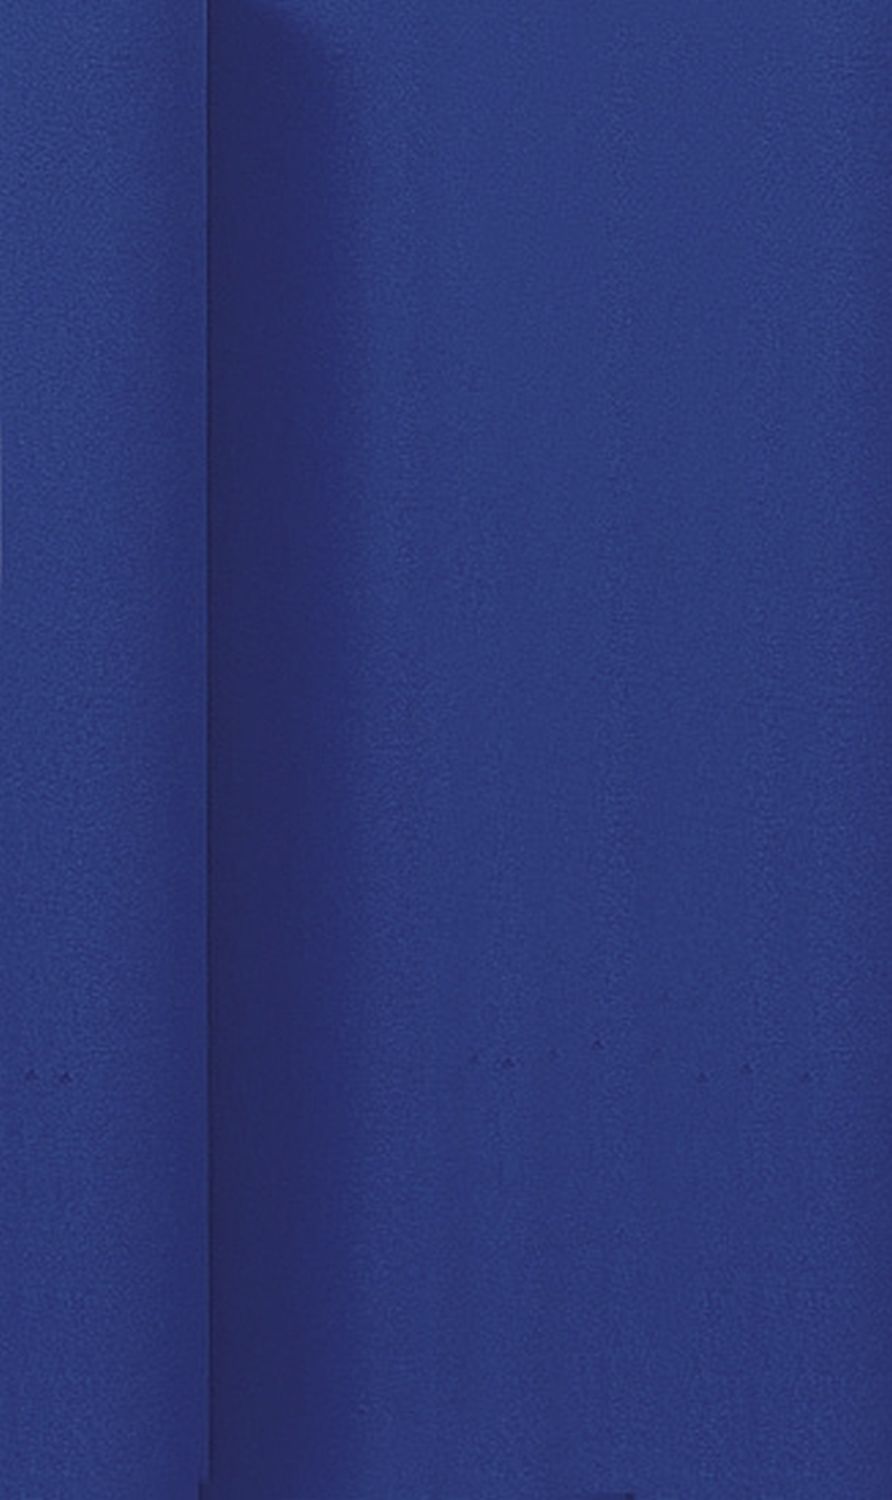 Tischtuchrolle - uni, 1,18 x 10 m, dunkelblau